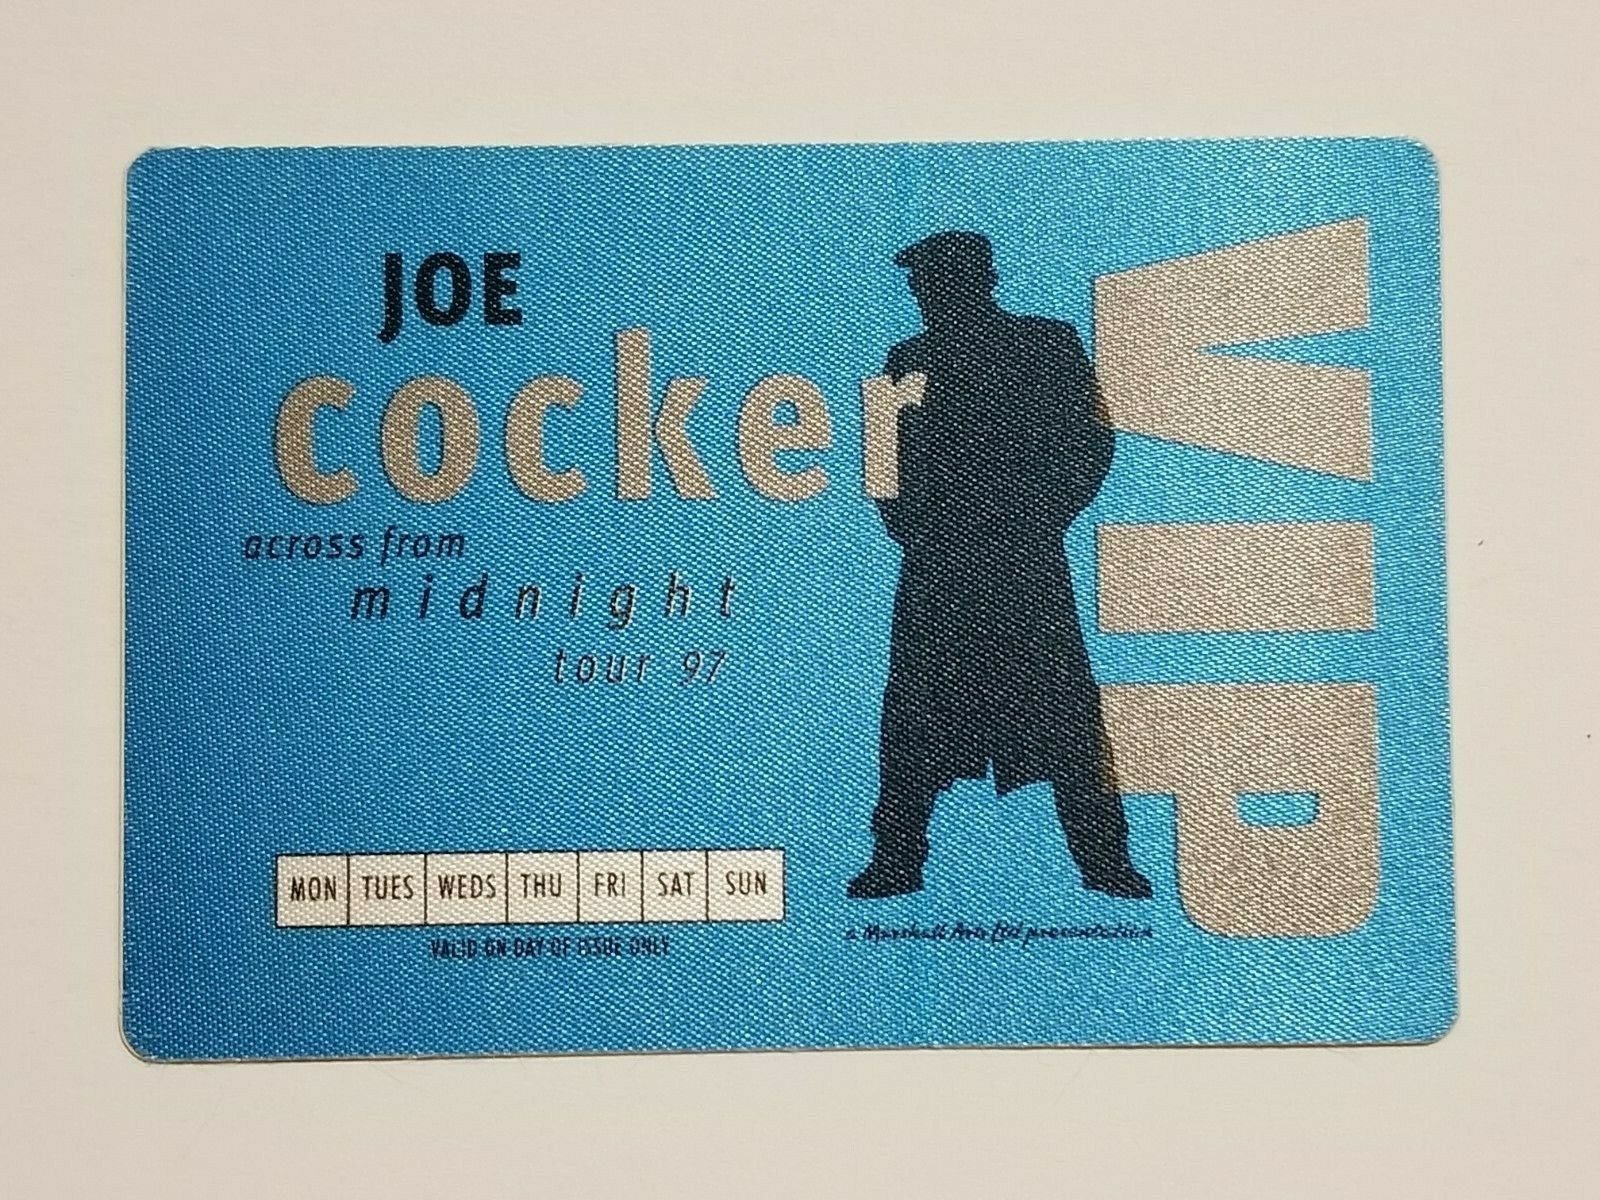 Unused Satin Joe Cocker Across From Midnight Tour '97 Blue Vip Backstage Pass